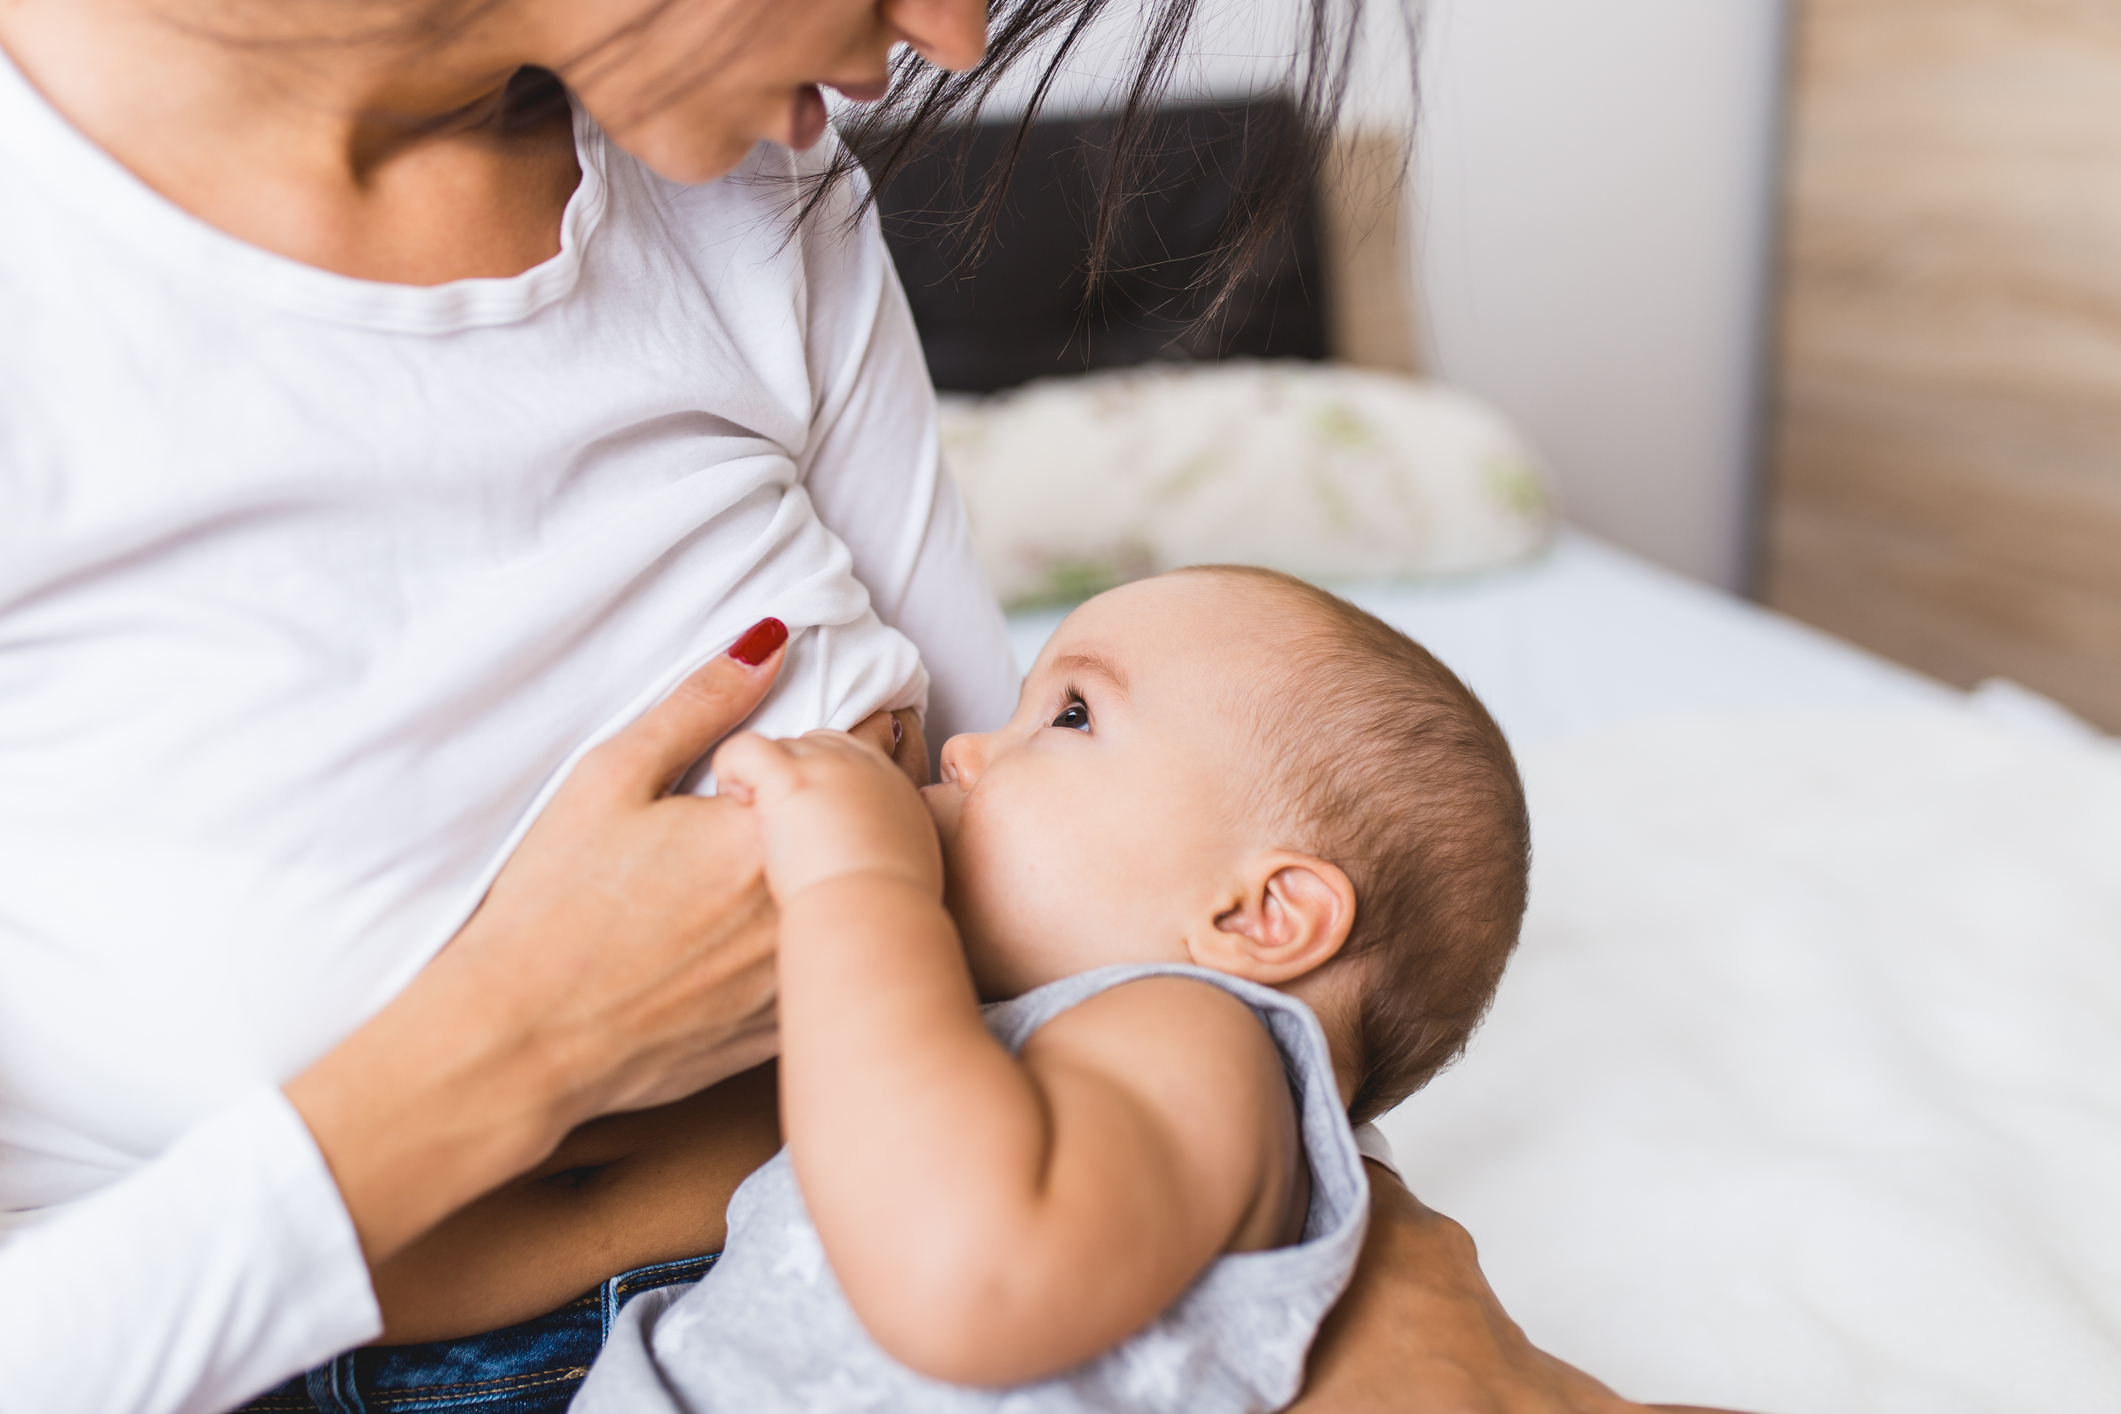 How to Make Breastfeeding Enjoyable